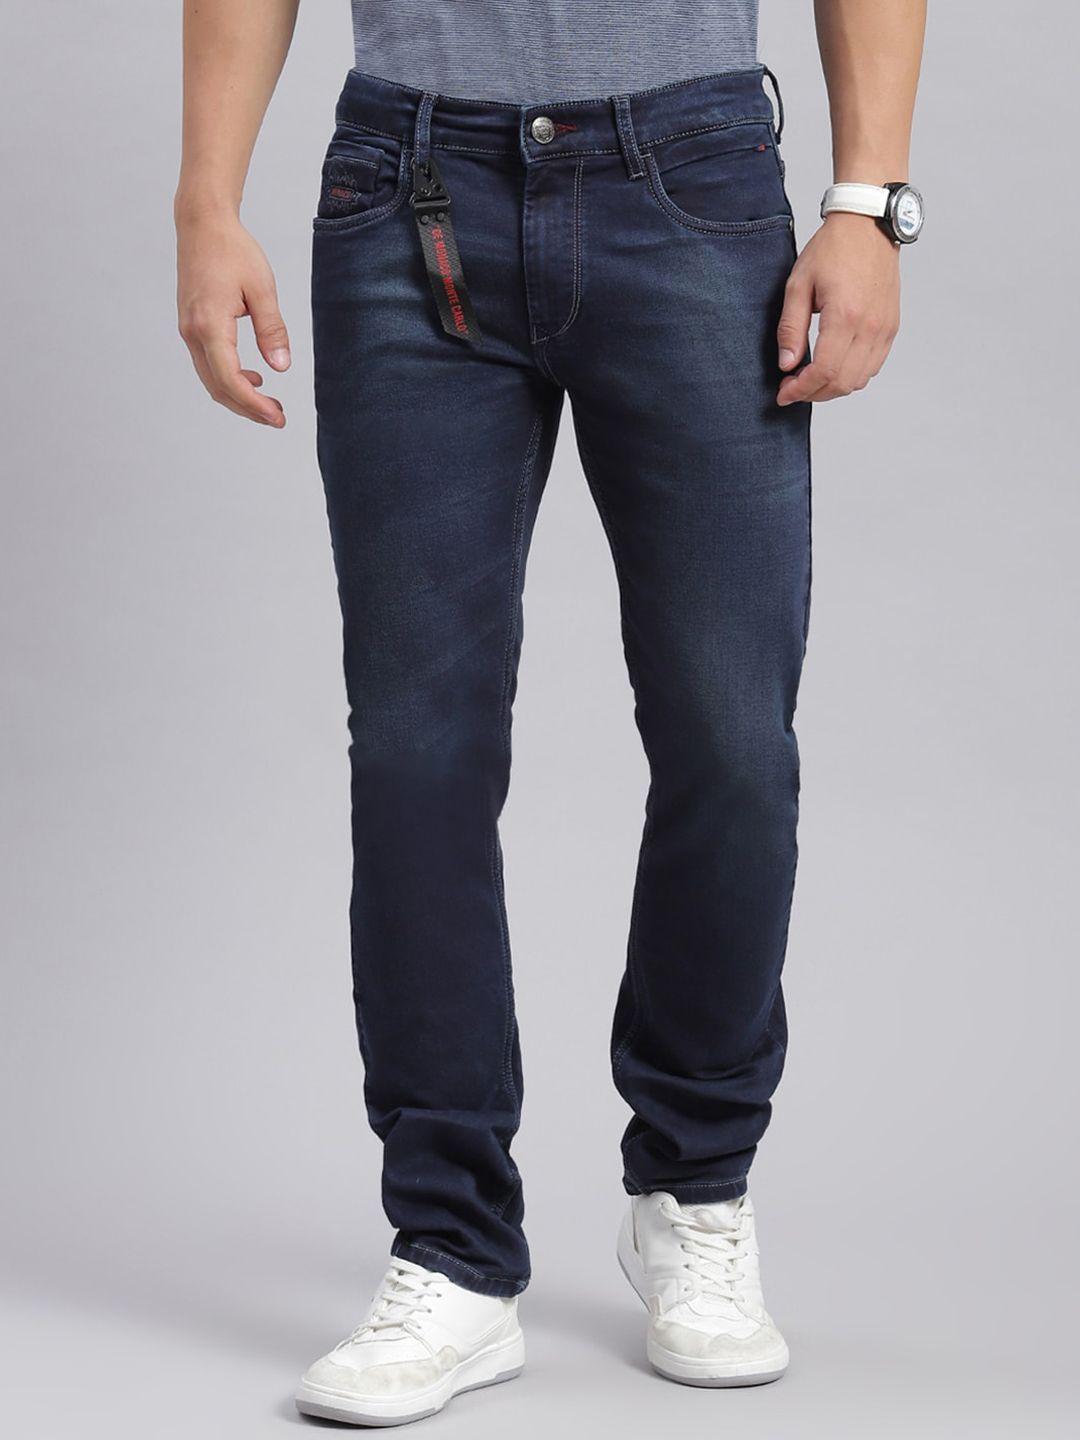 monte-carlo-men-regular-fit-mid-rise-clean-look-cotton-jeans